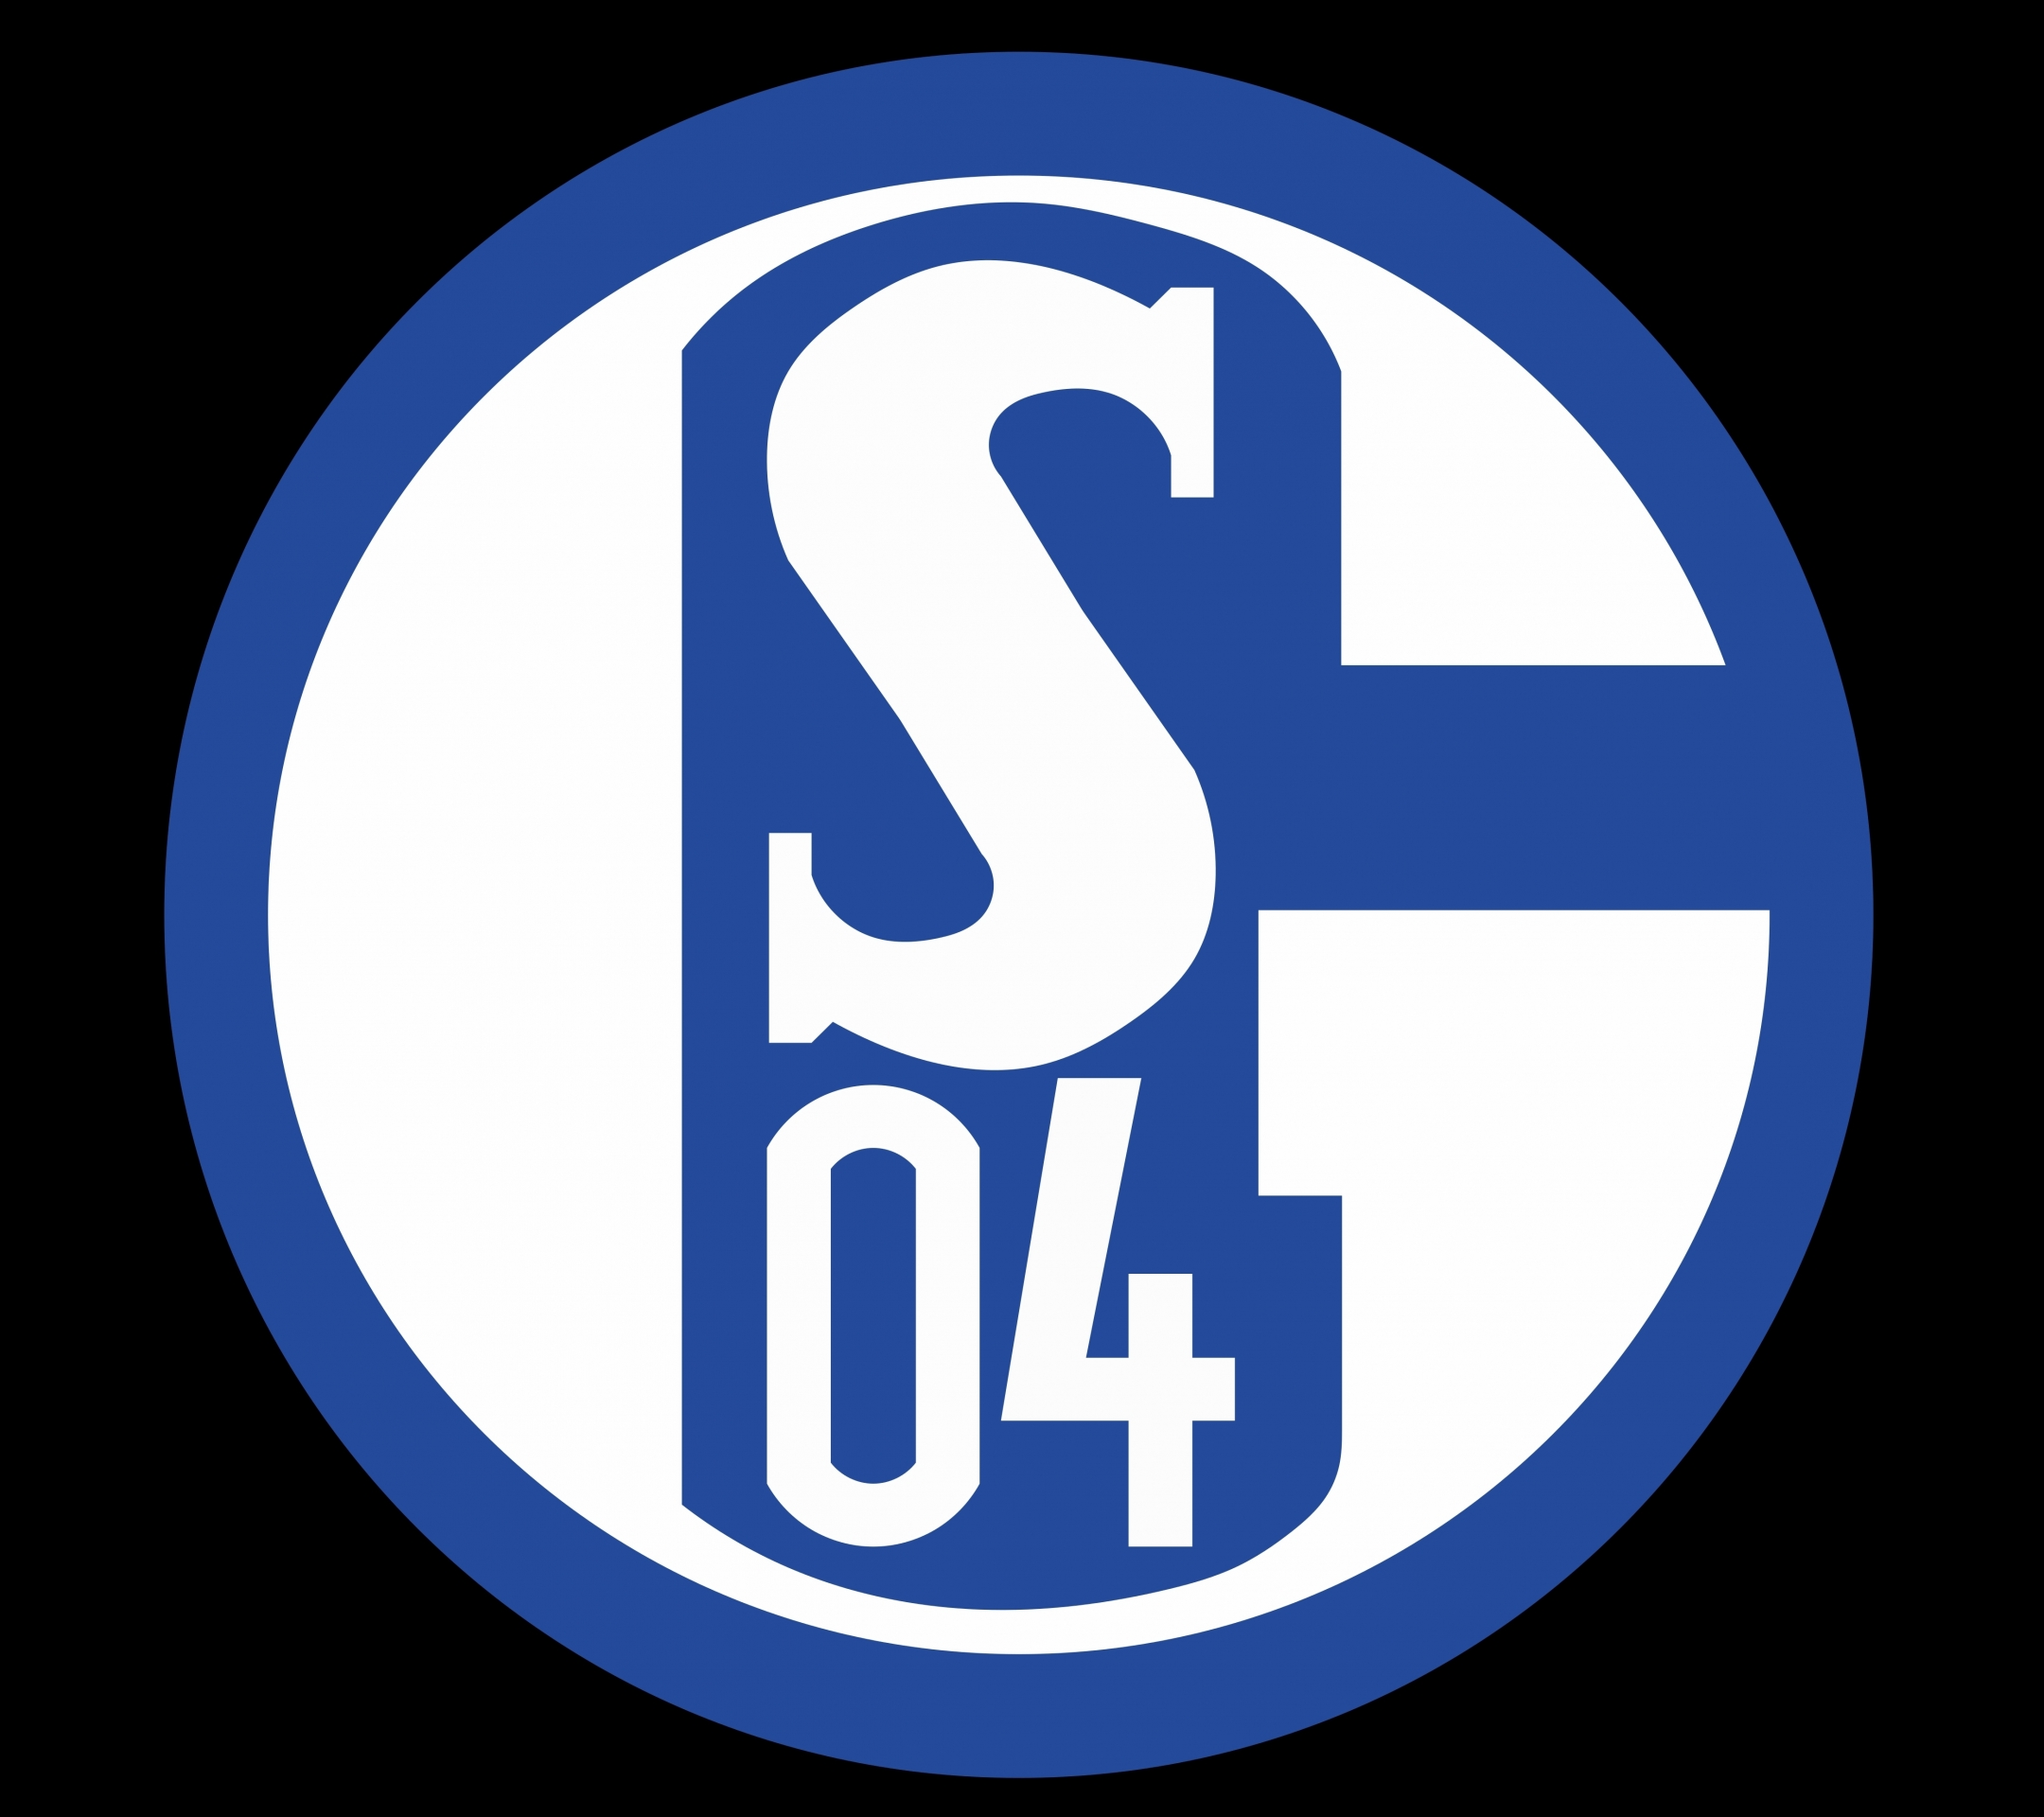 Descarga gratuita de fondo de pantalla para móvil de Fútbol, Deporte, Schalke 04.